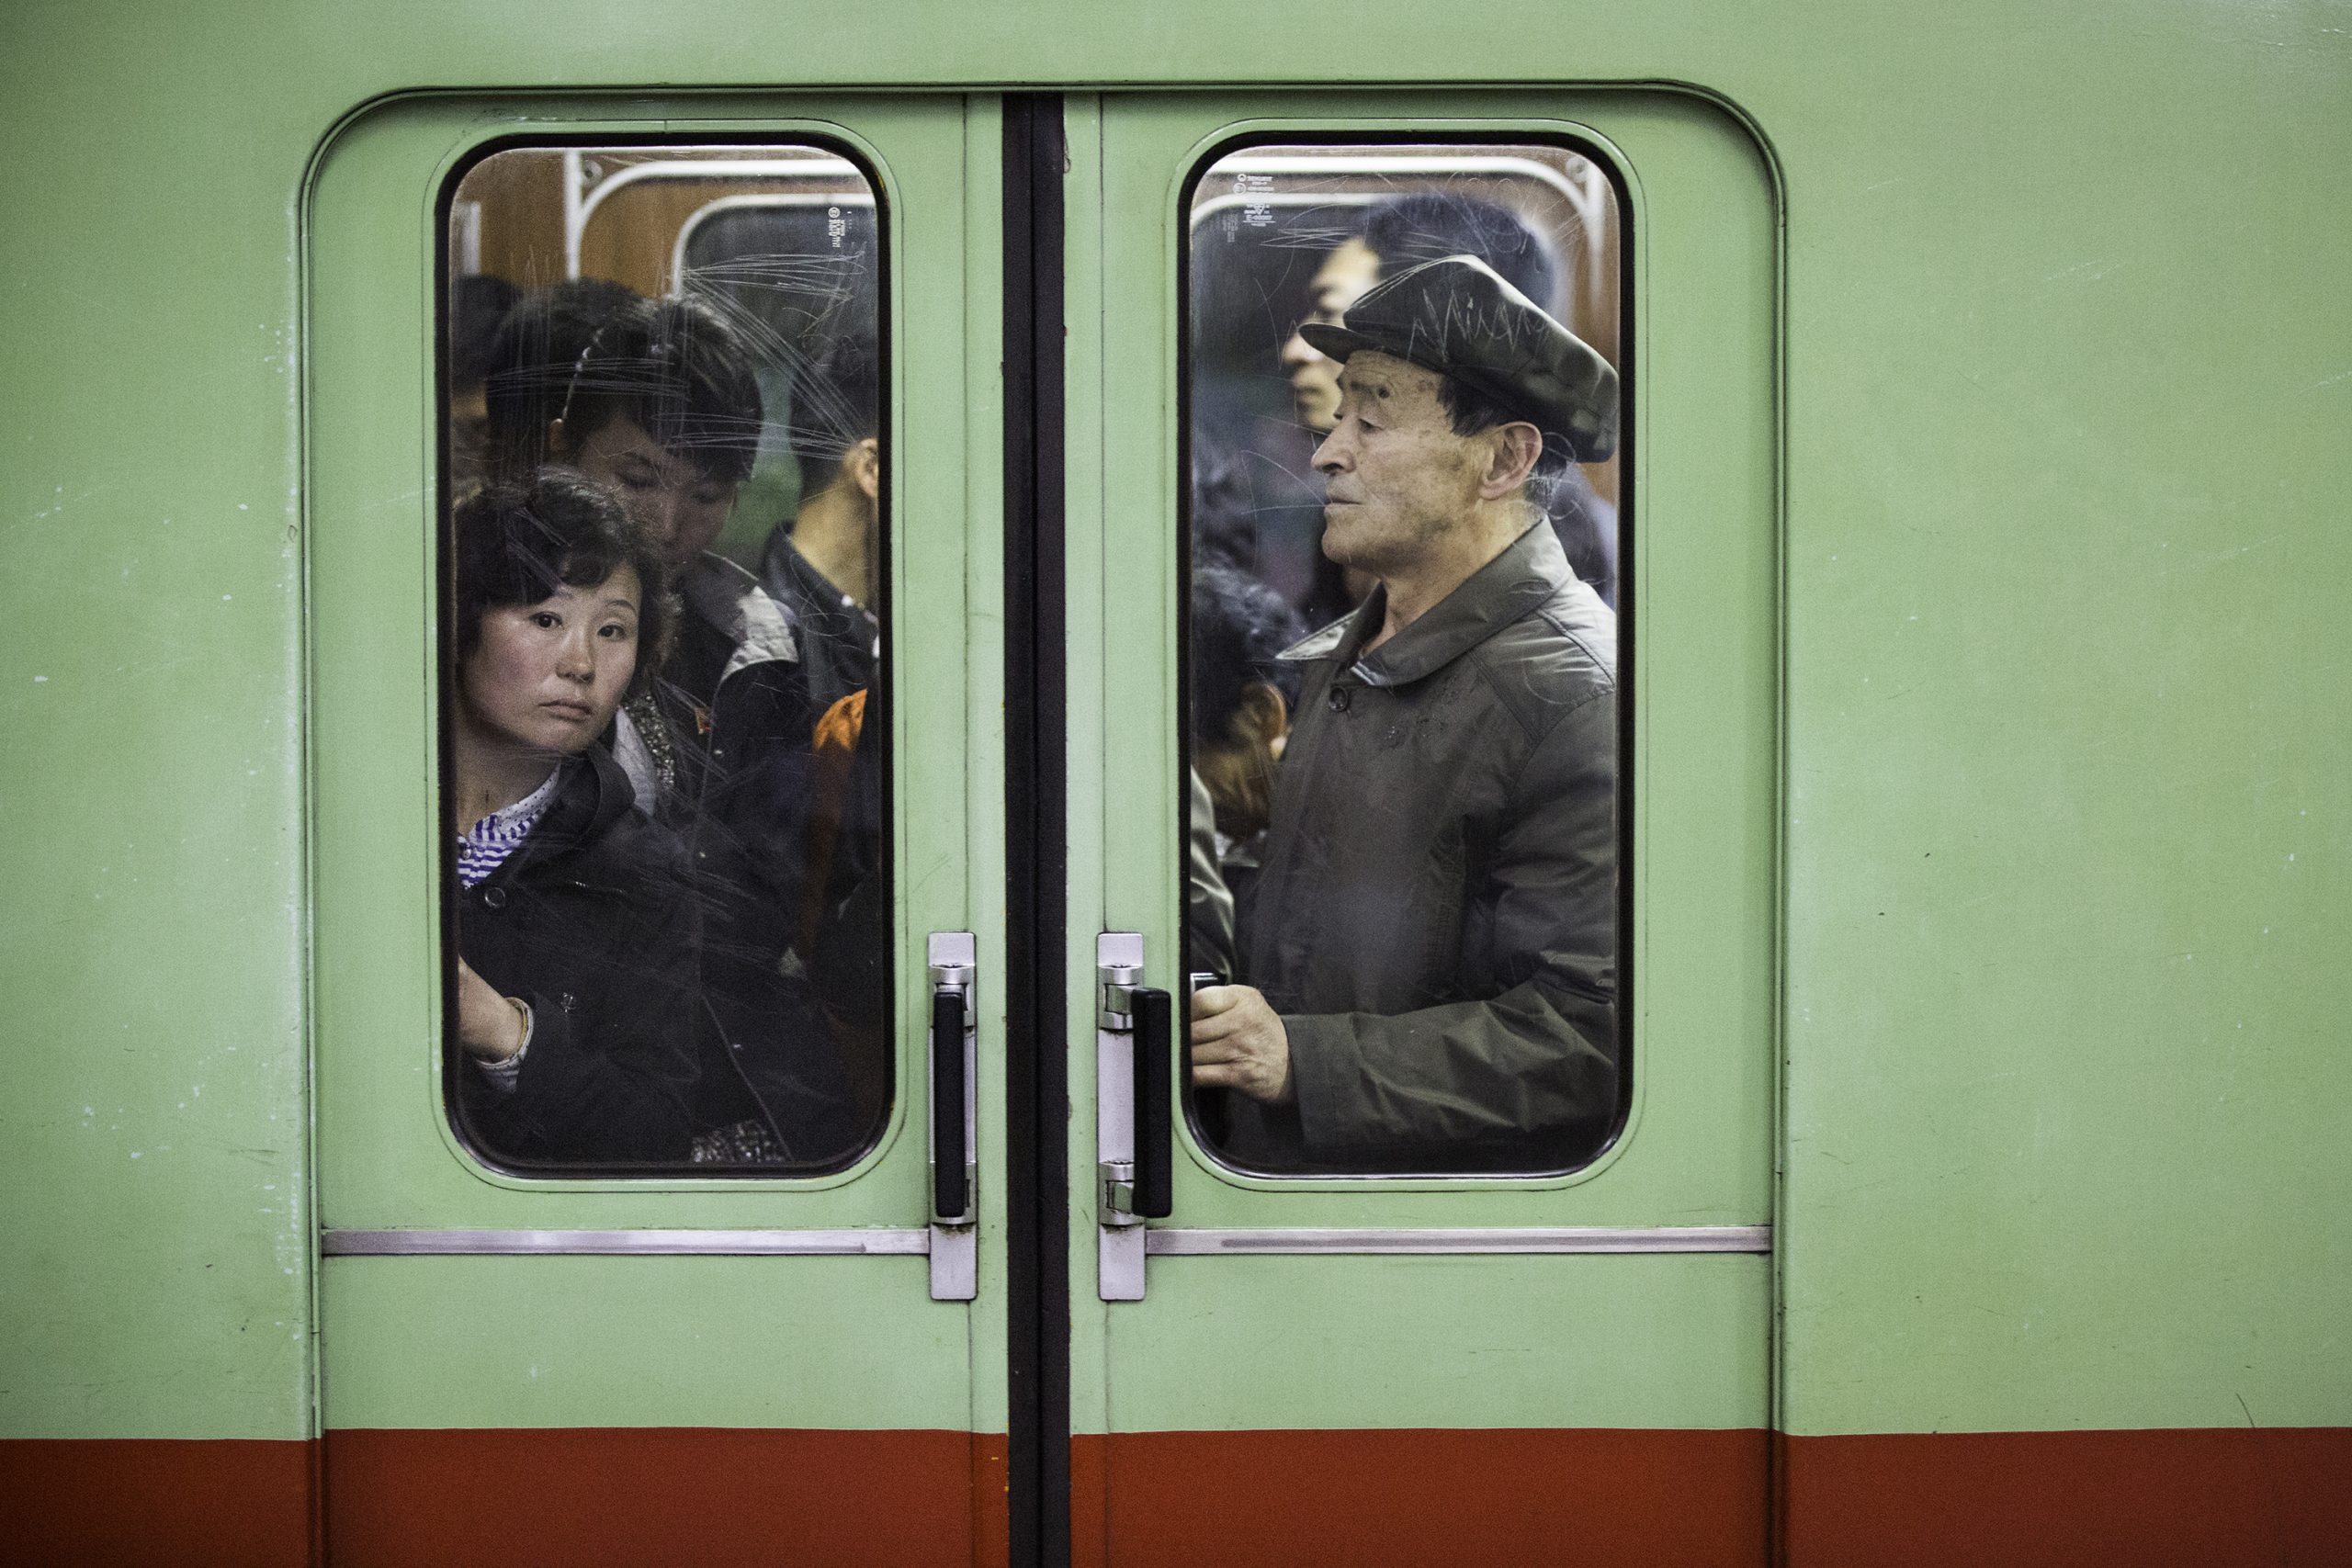     Saša Petricic, Pyongyang Commute, 2017

